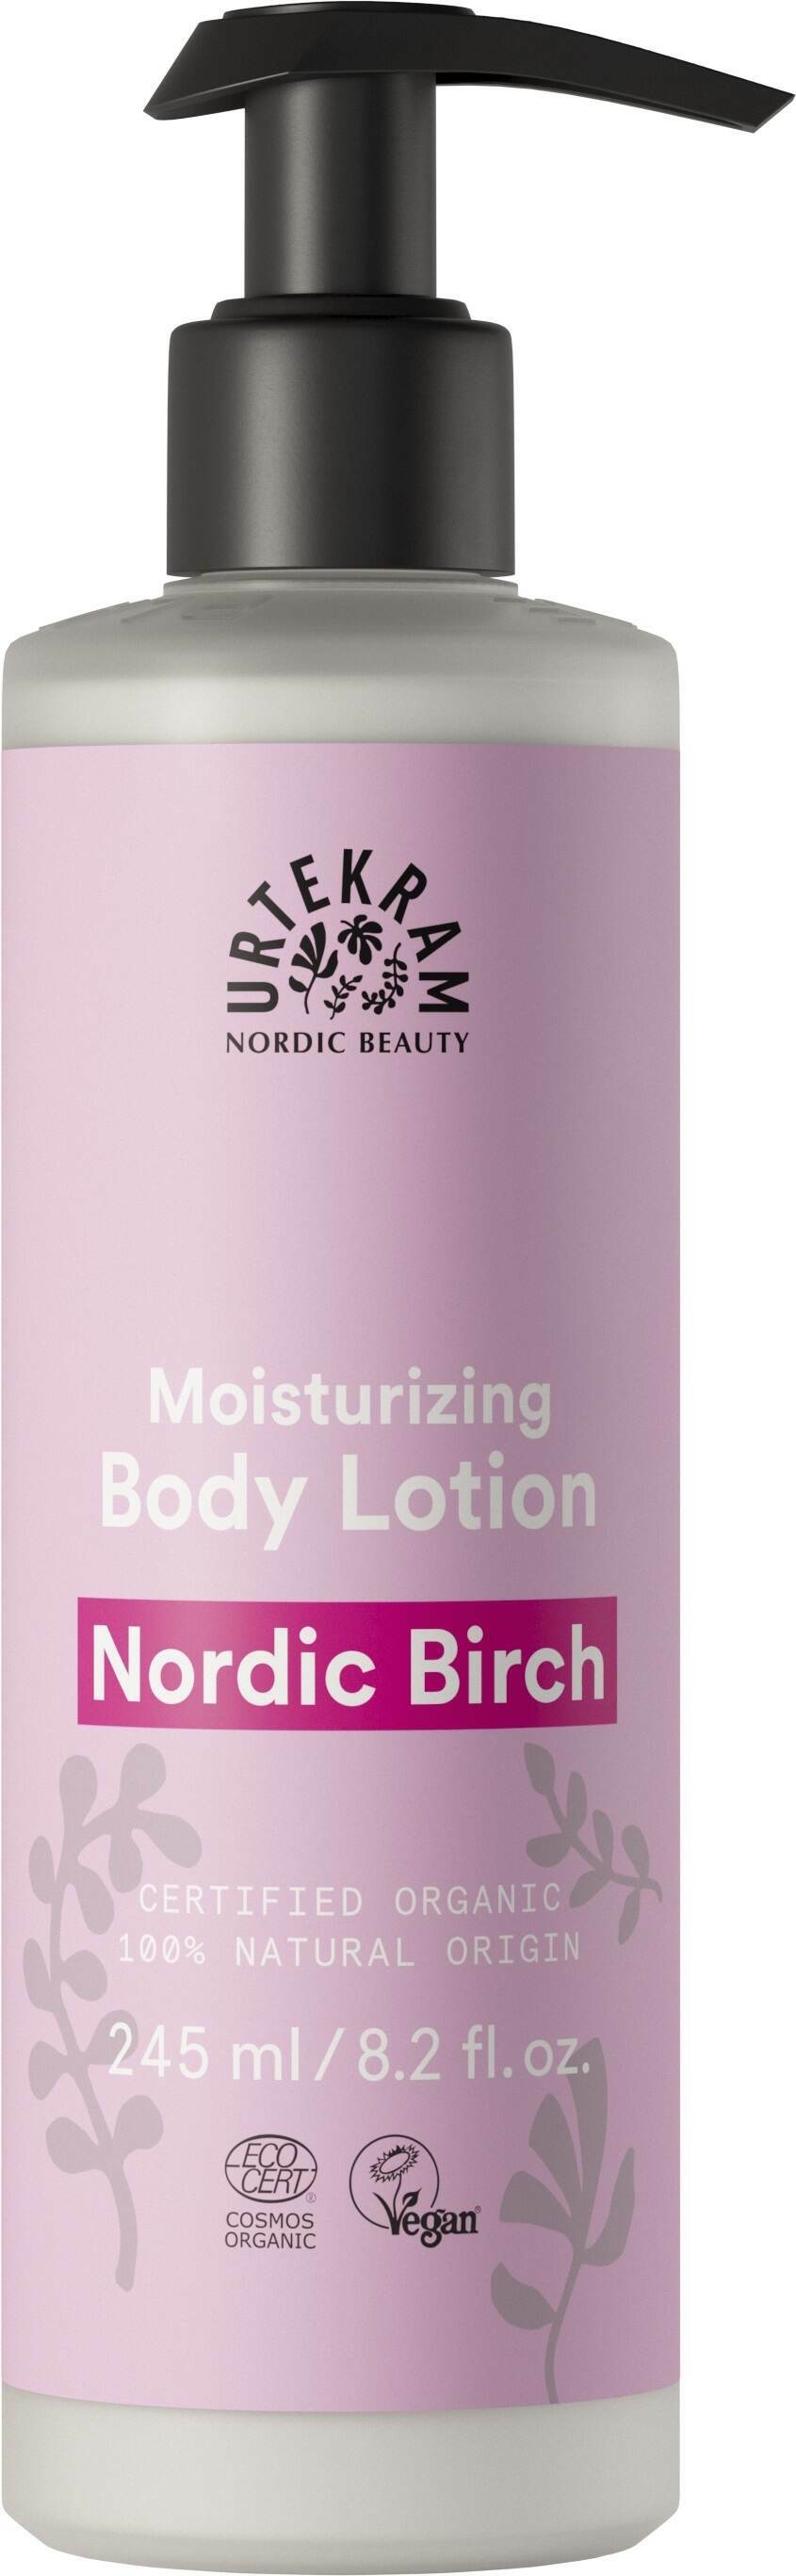 Urtekram Organic Nordic Birch Body Lotion 245ml